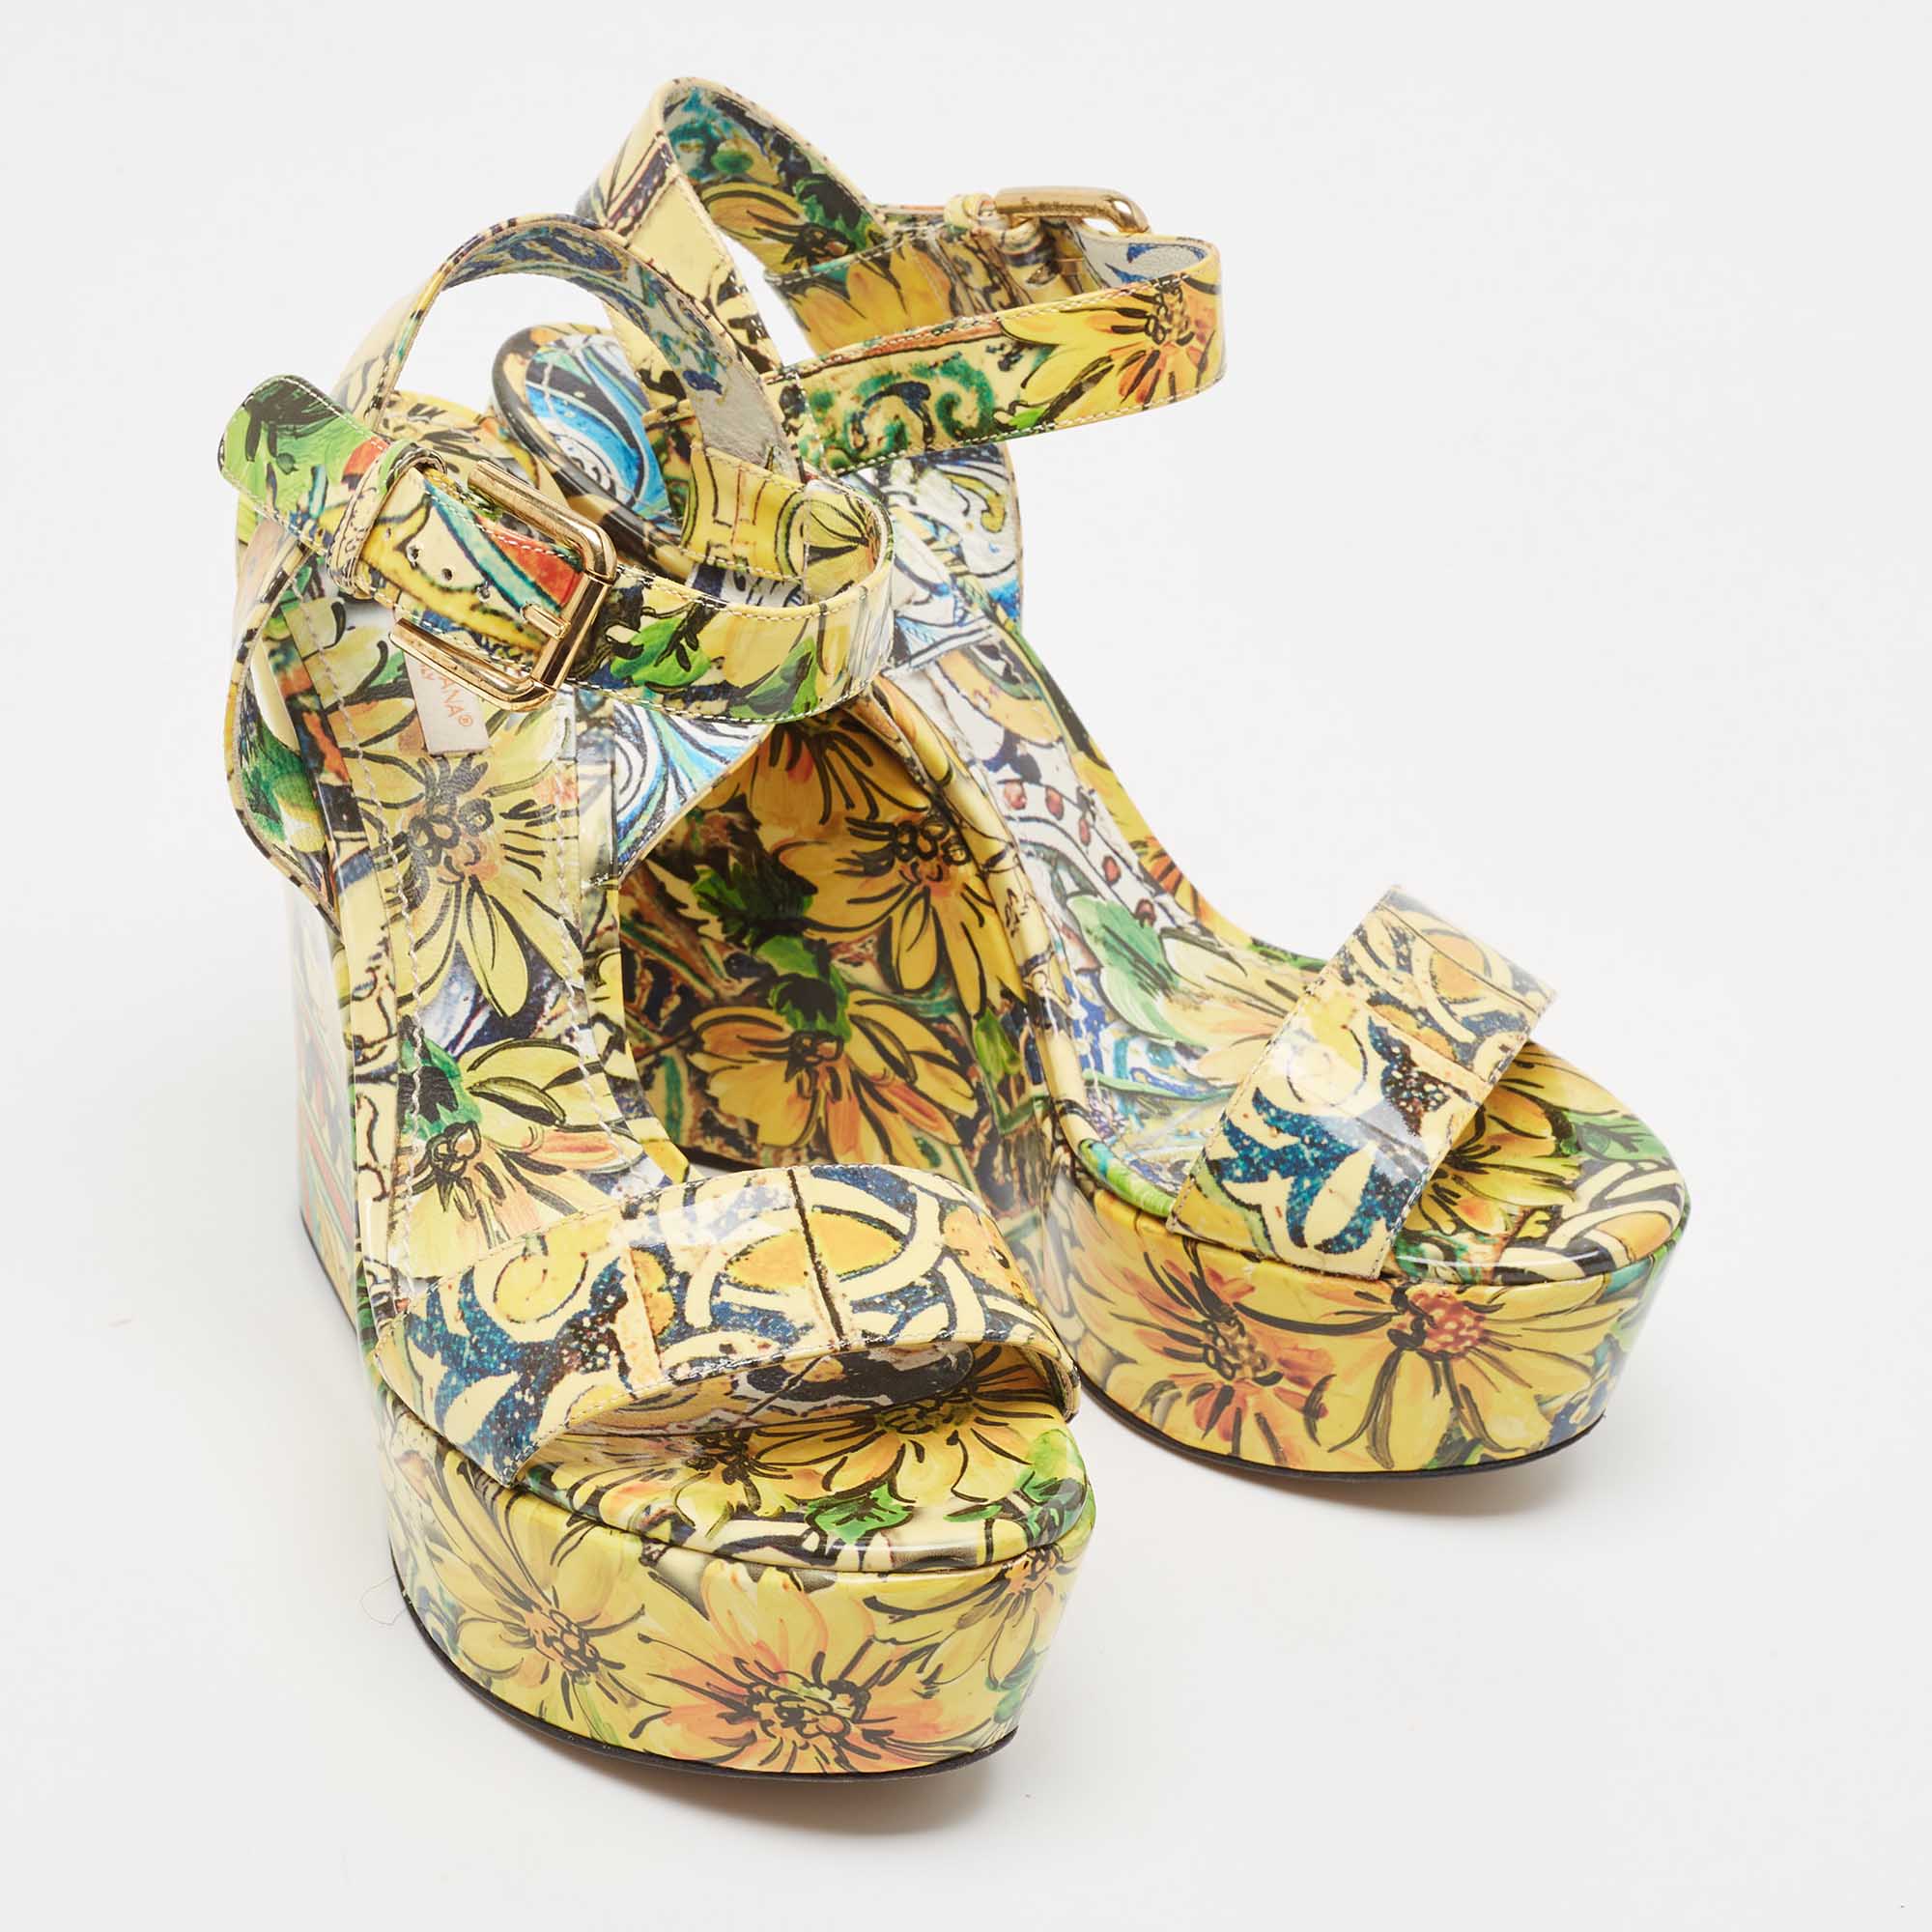 Dolce & Gabbana Multicolor Patent Wedge Platform Ankle Strap Sandals Size 40